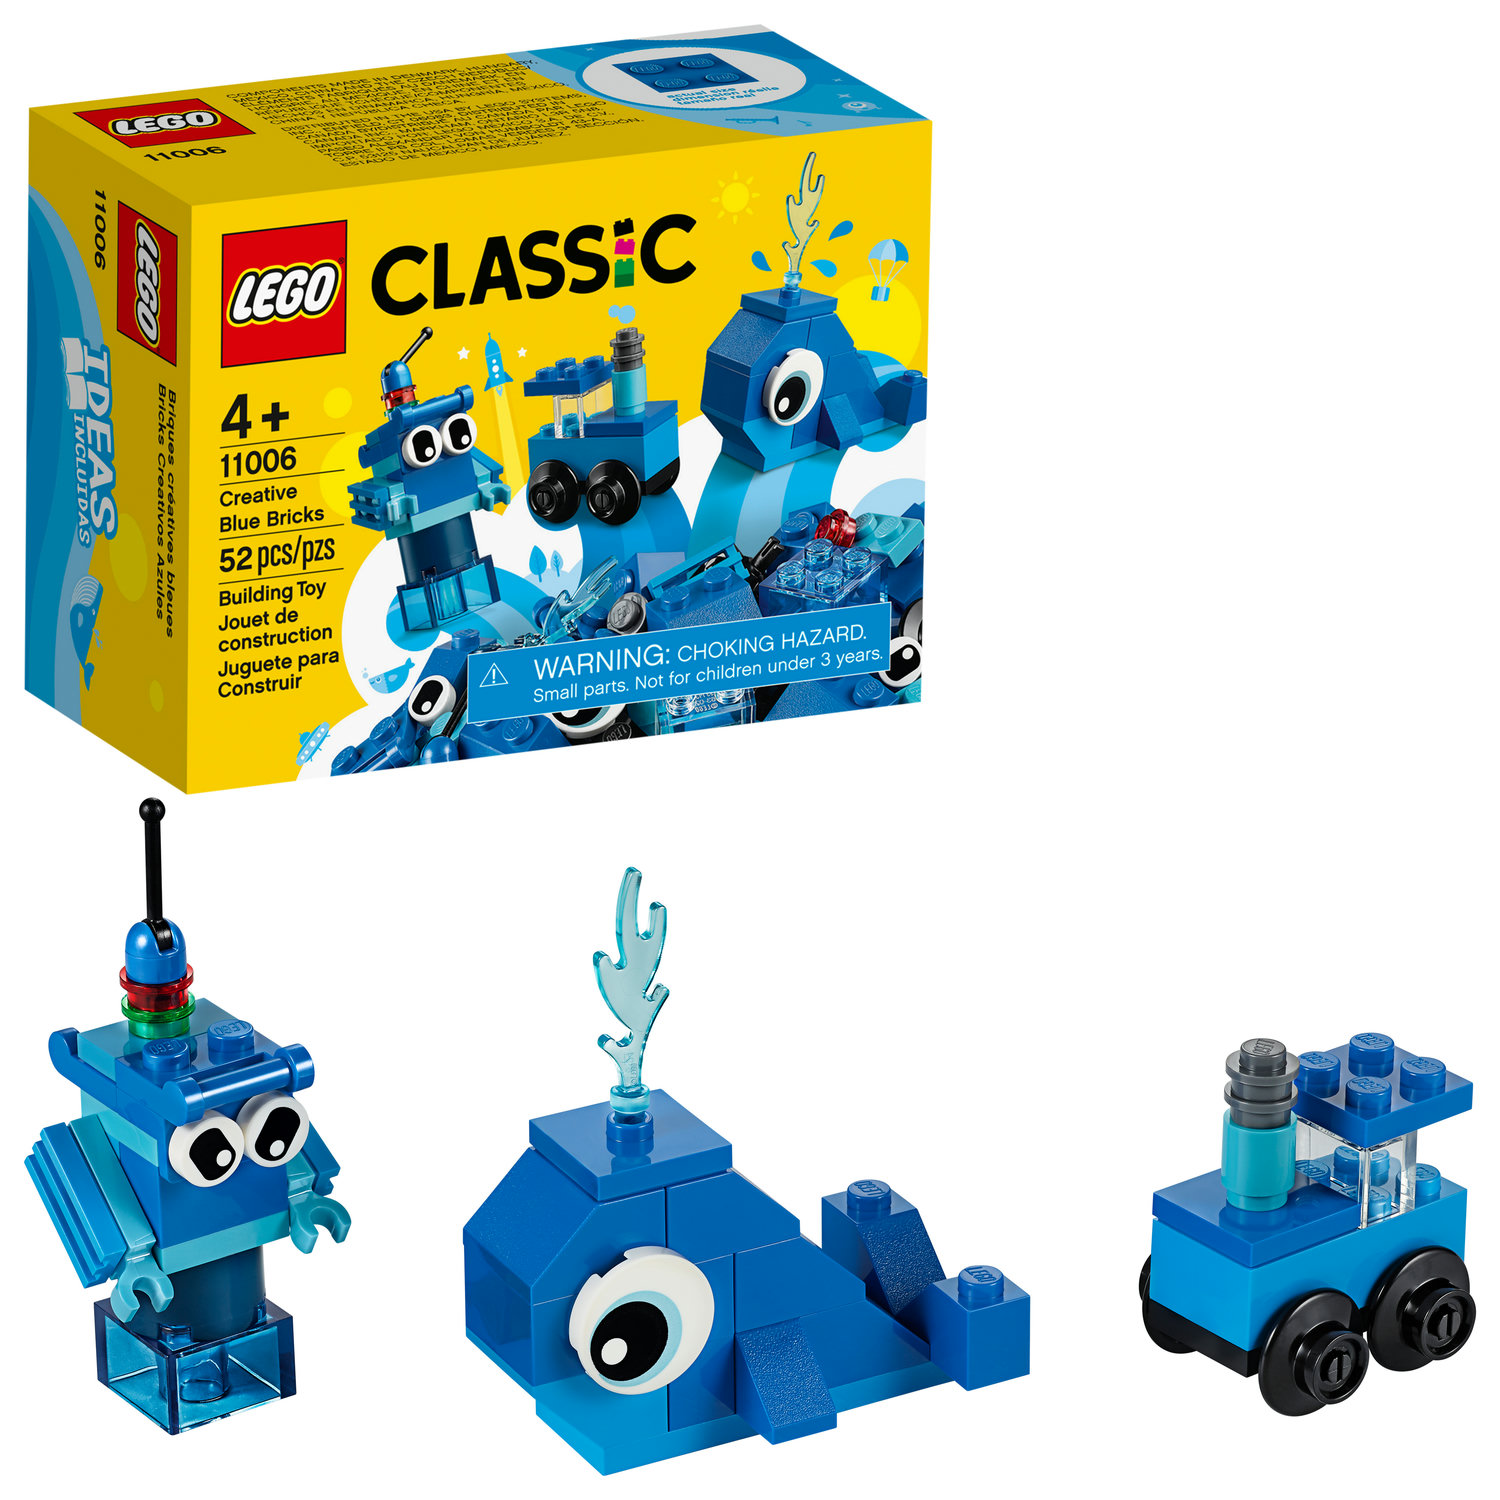 LEGO Classic Creative Blue Bricks 11006 Building Set for Imaginative Play (52 Pieces) - image 1 of 5